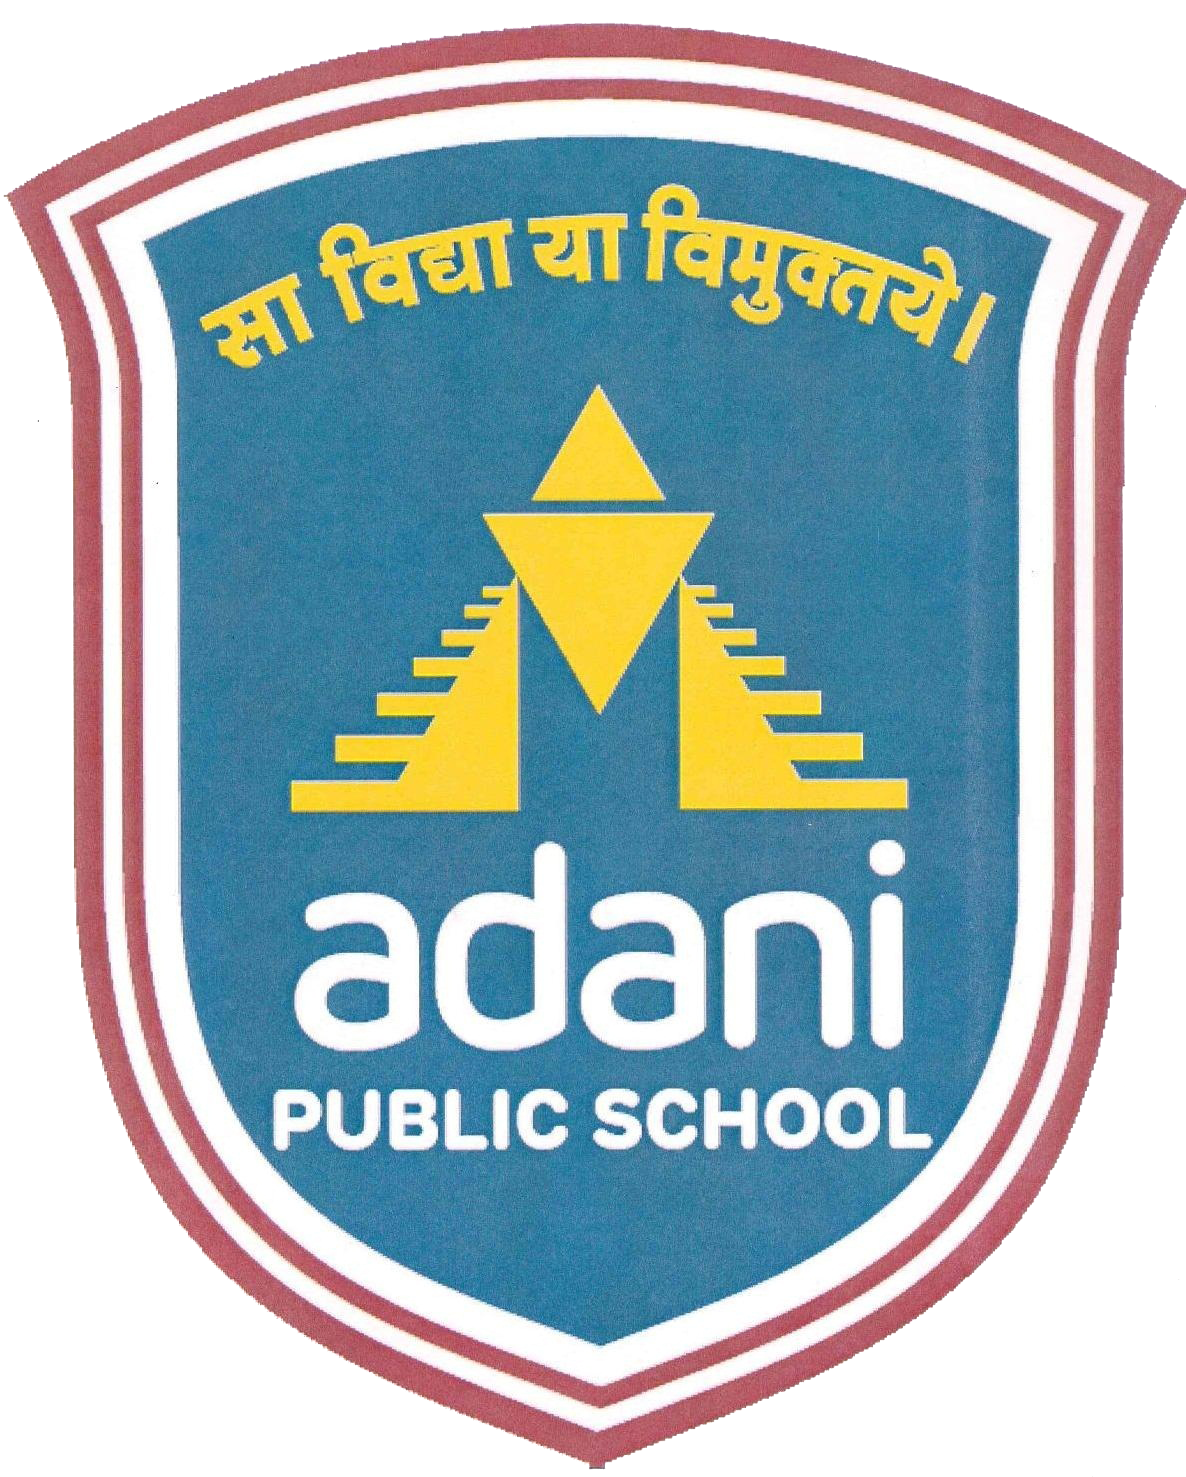 Adani Public School|Colleges|Education